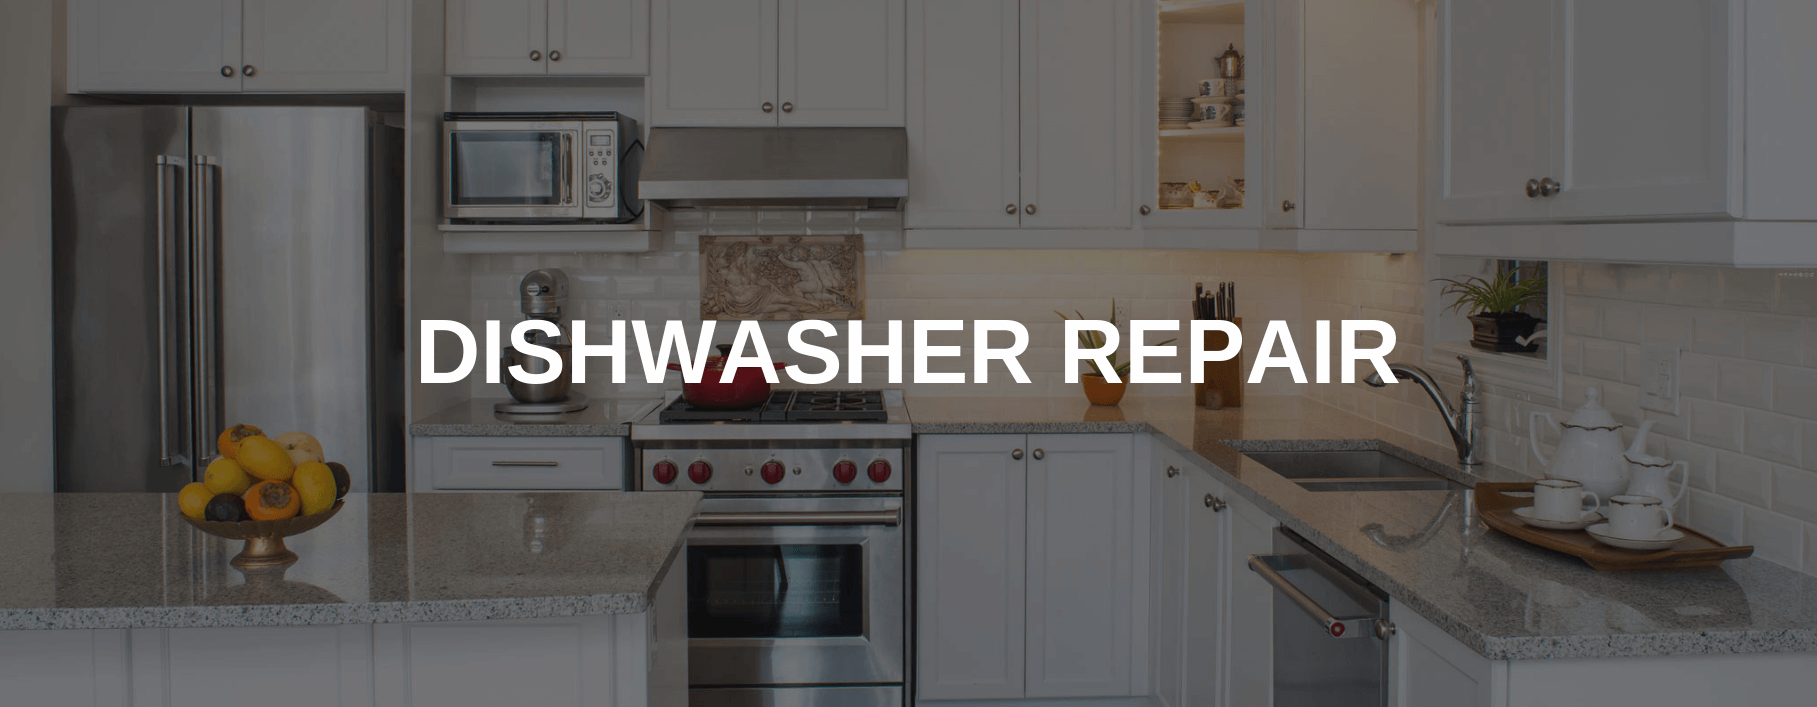 dishwasher repair annandale